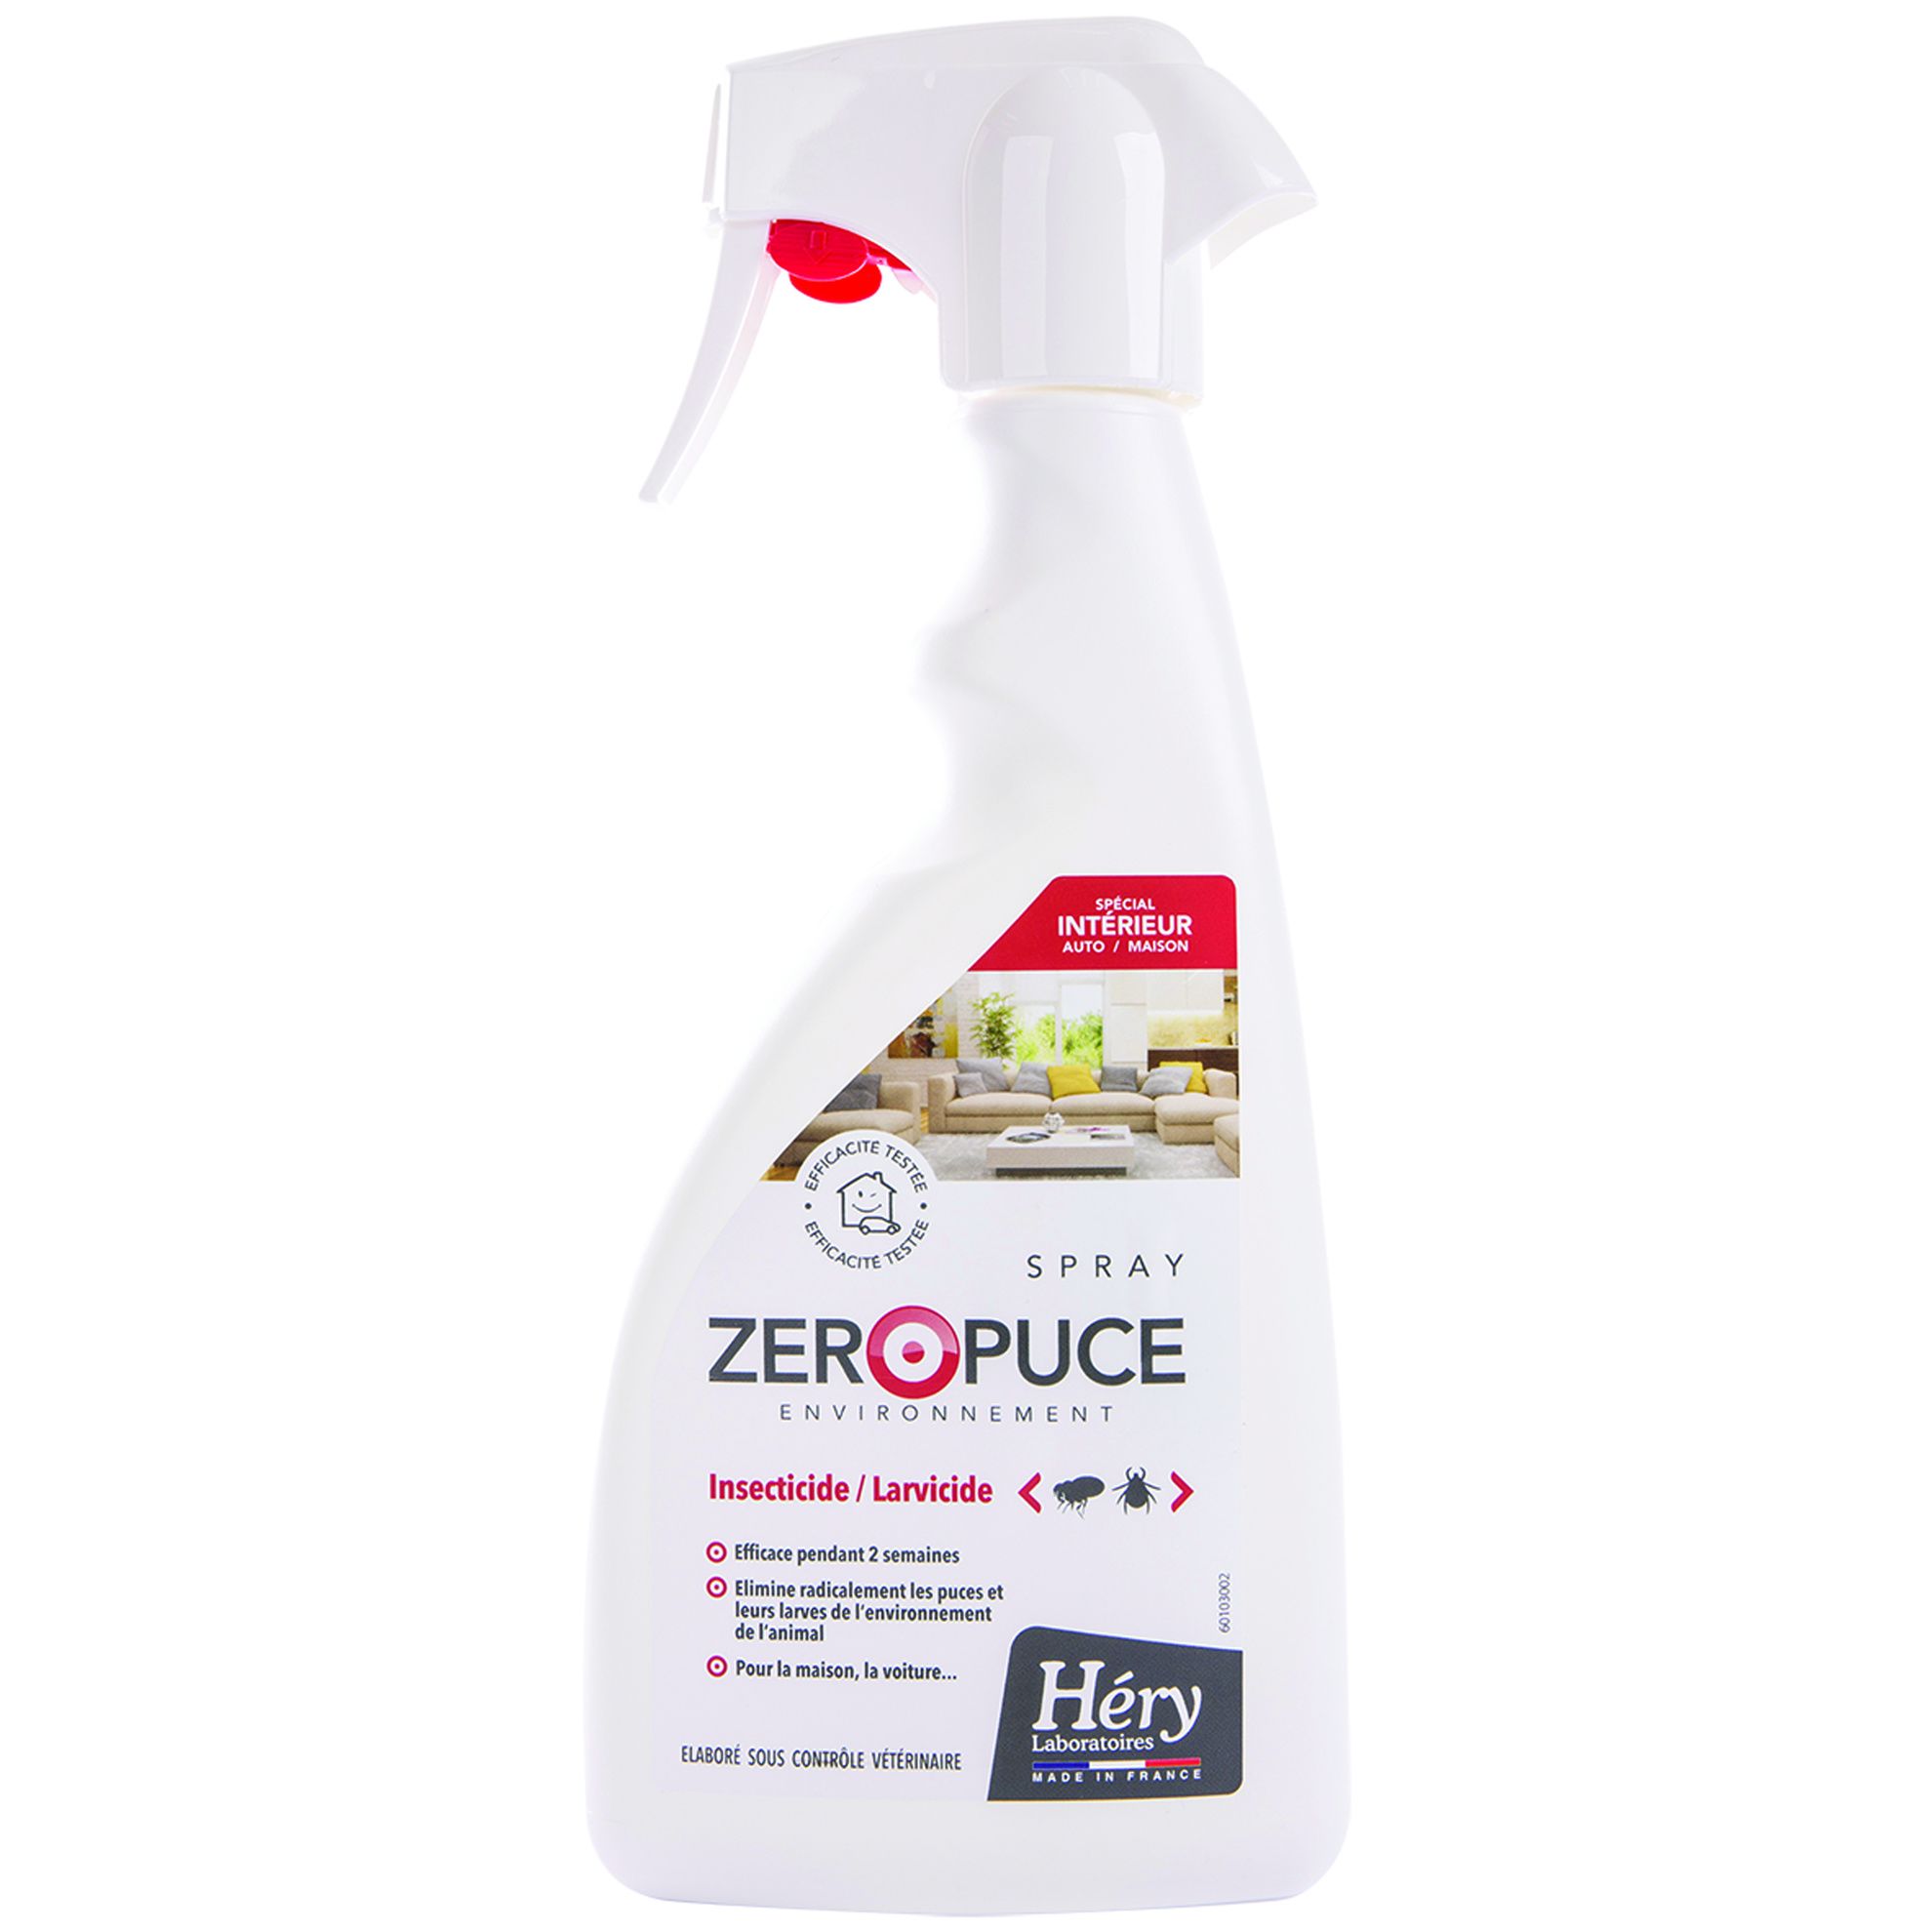 Spray zero puce environnement 500 ml